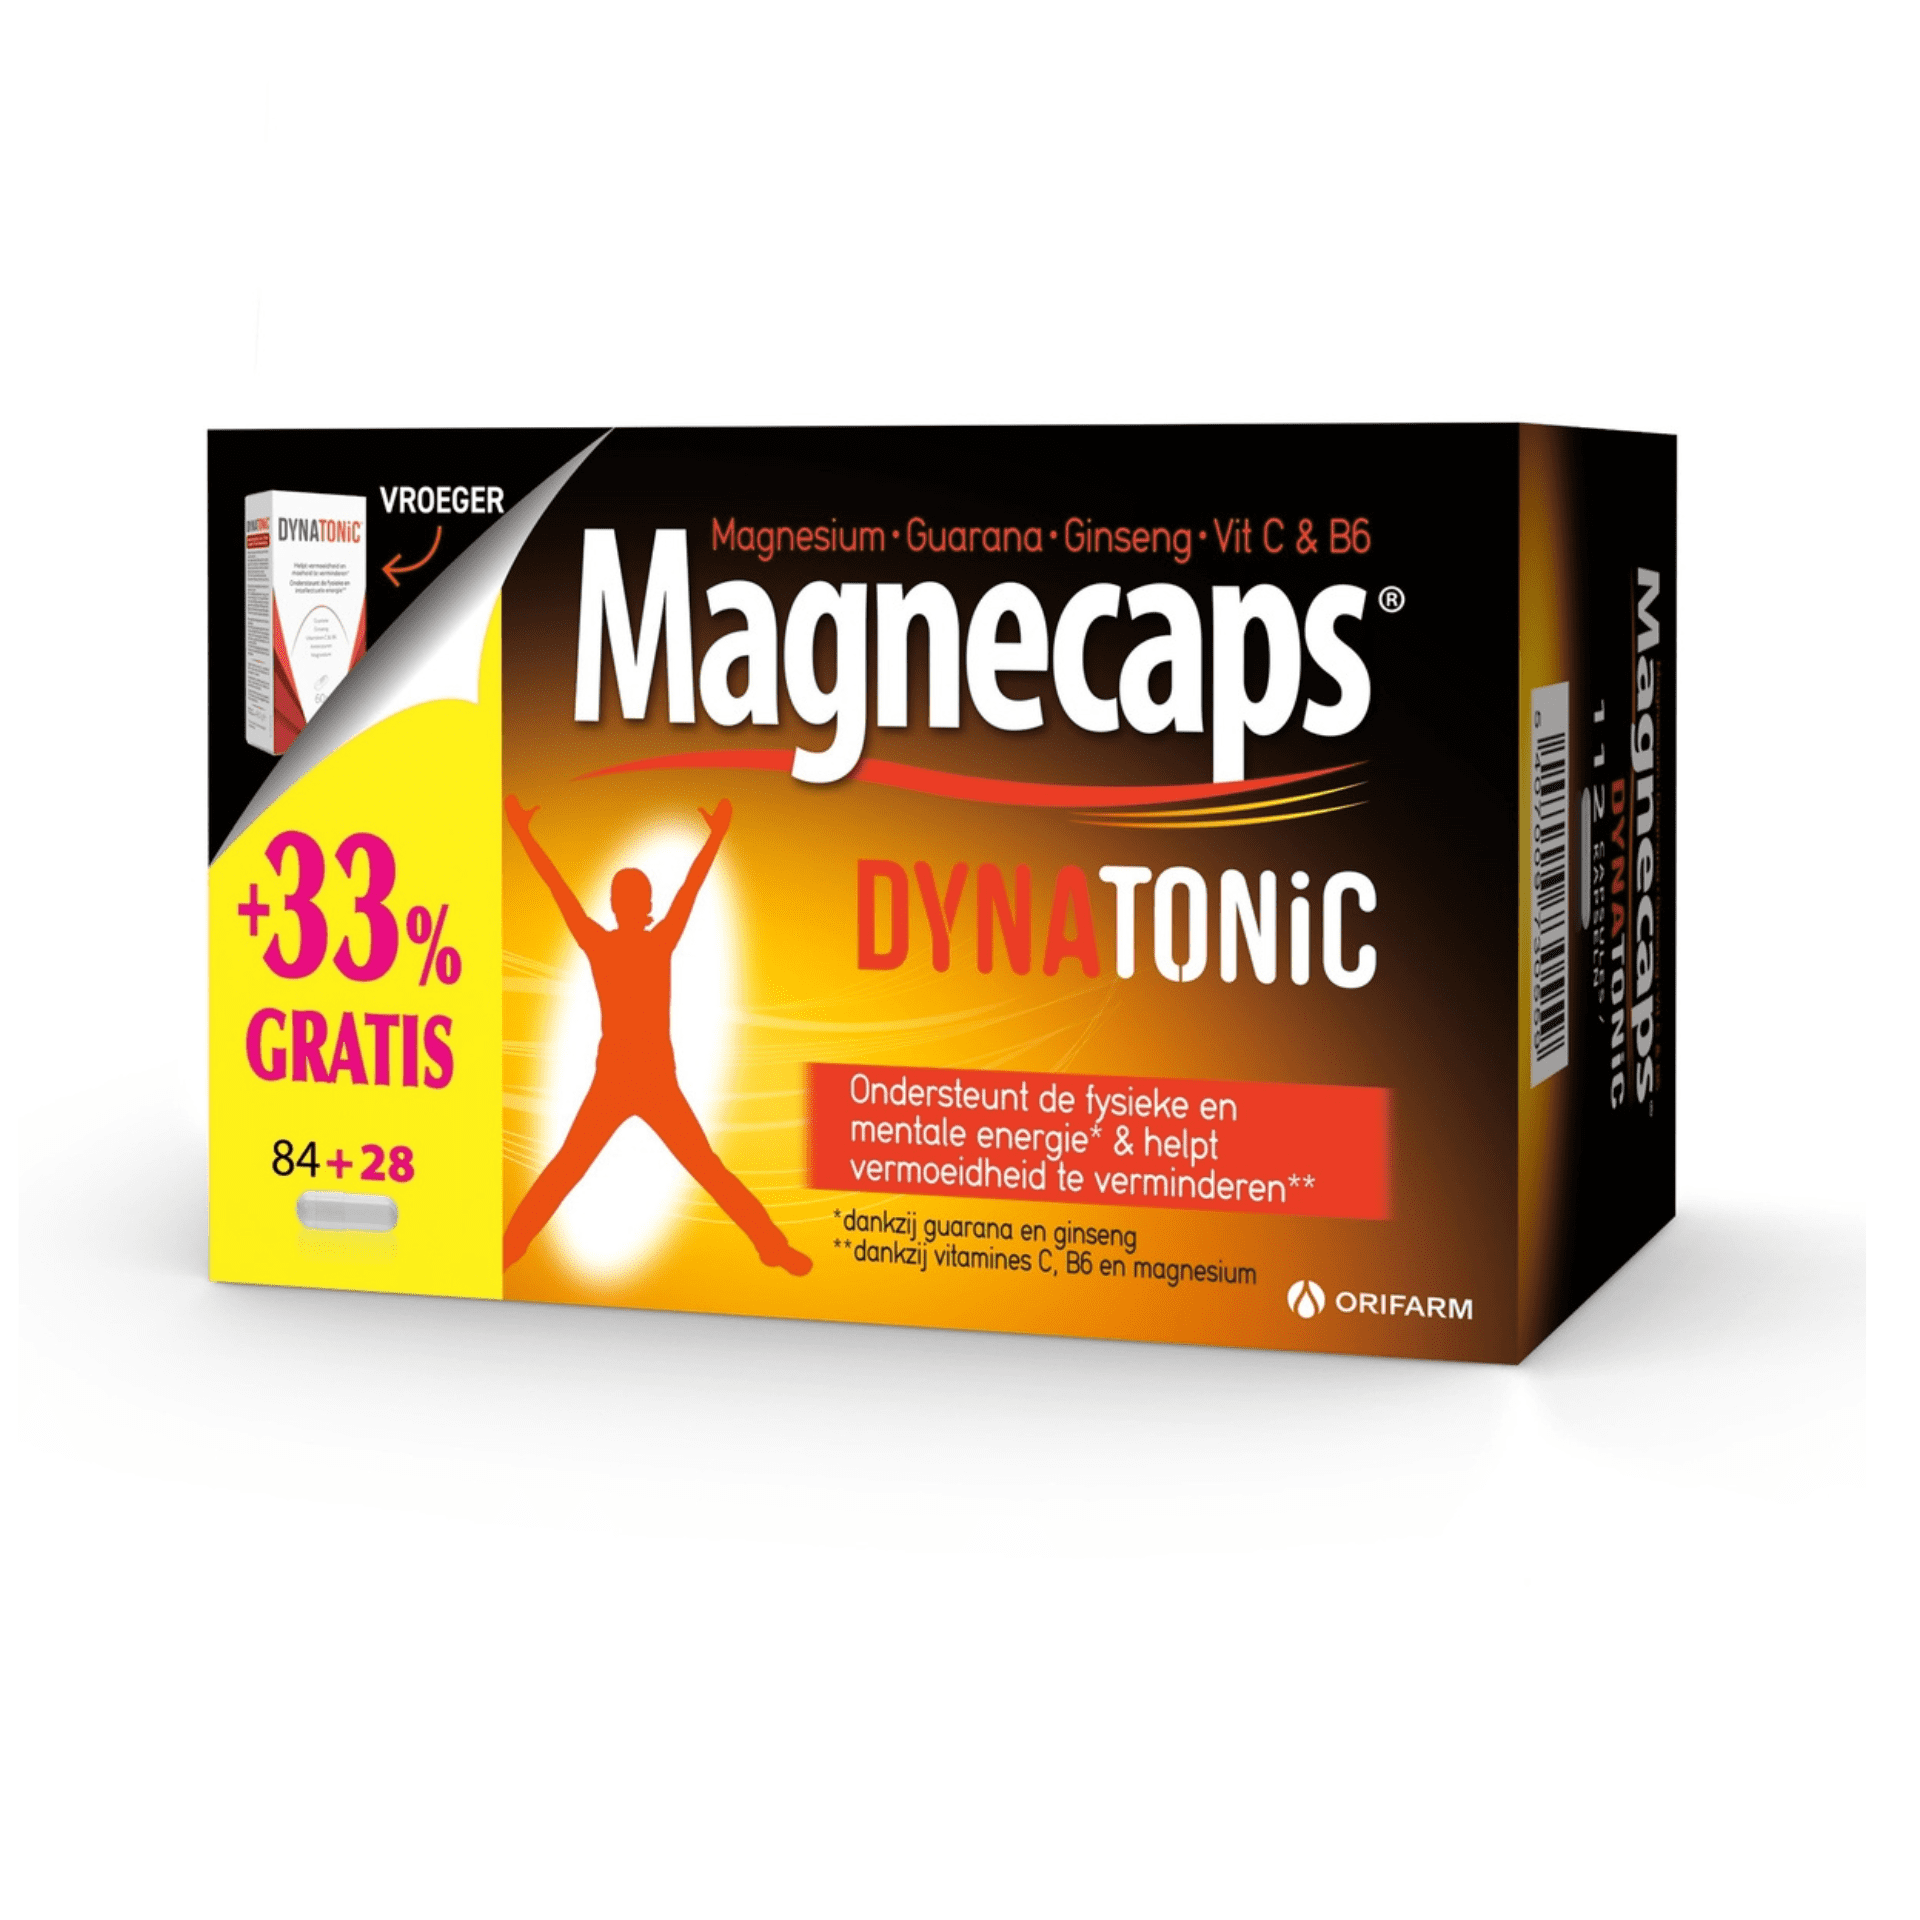 Magnecaps Dynatonic Caps 84 + Caps 28